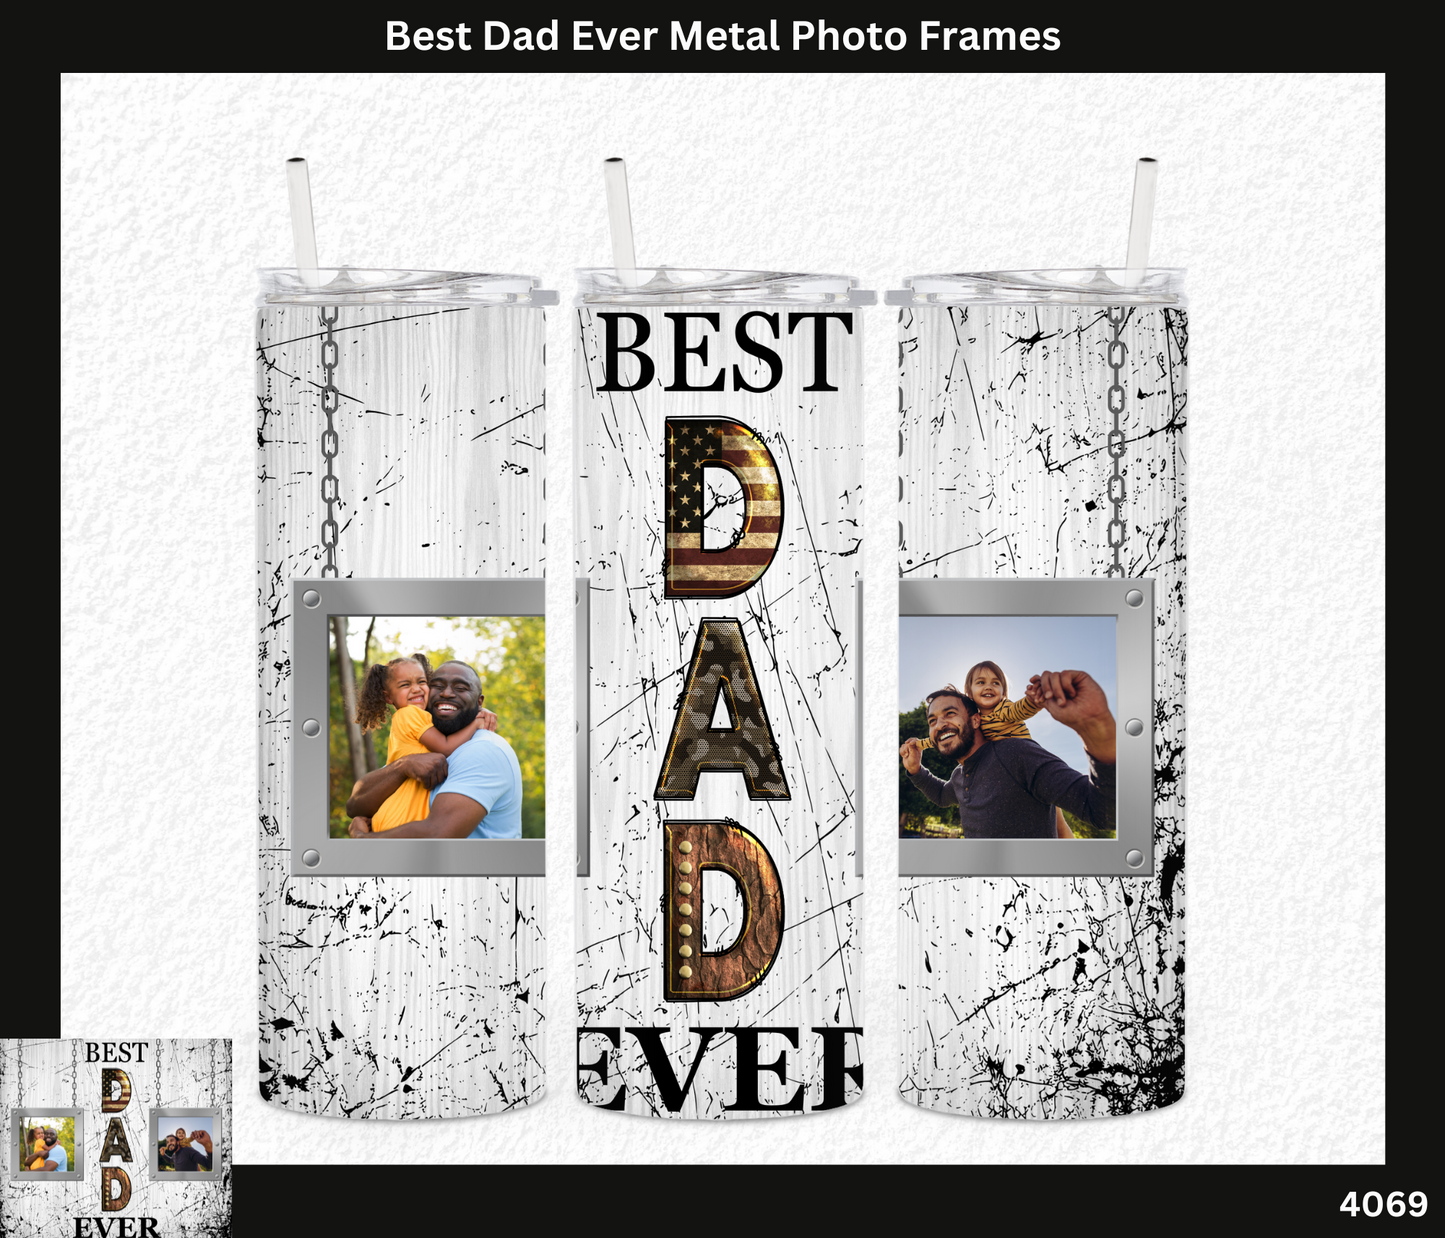 Best Dad Ever Metal Photo Frames - CUSTOM